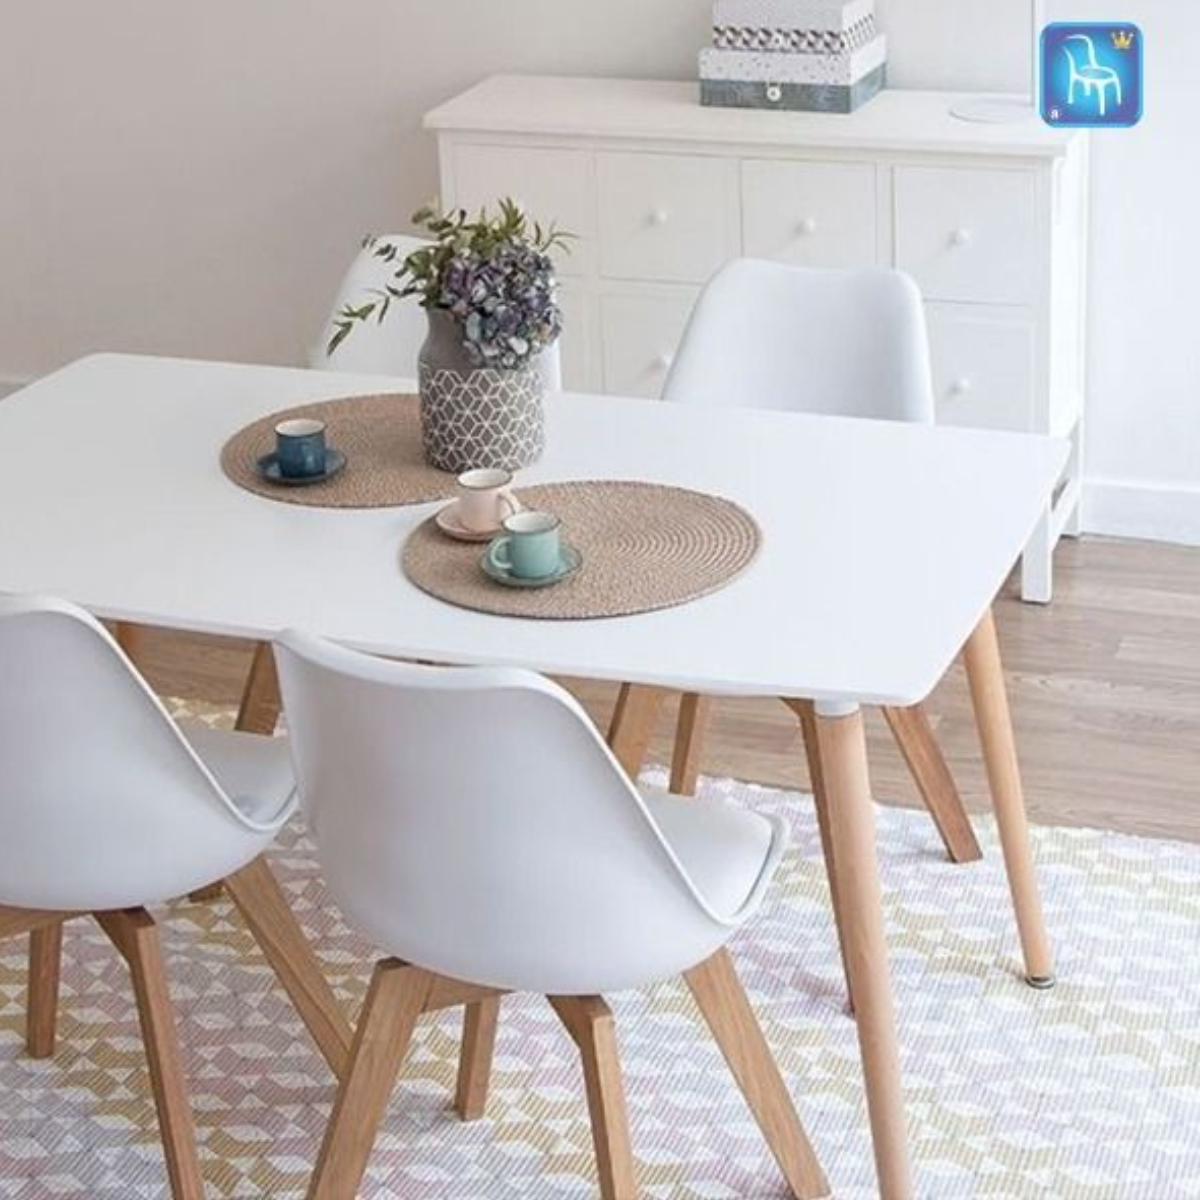 Cadeira para Mesa de Jantar Sala Cozinha Escrivaninha Saarinen Design Leda Branca - 5